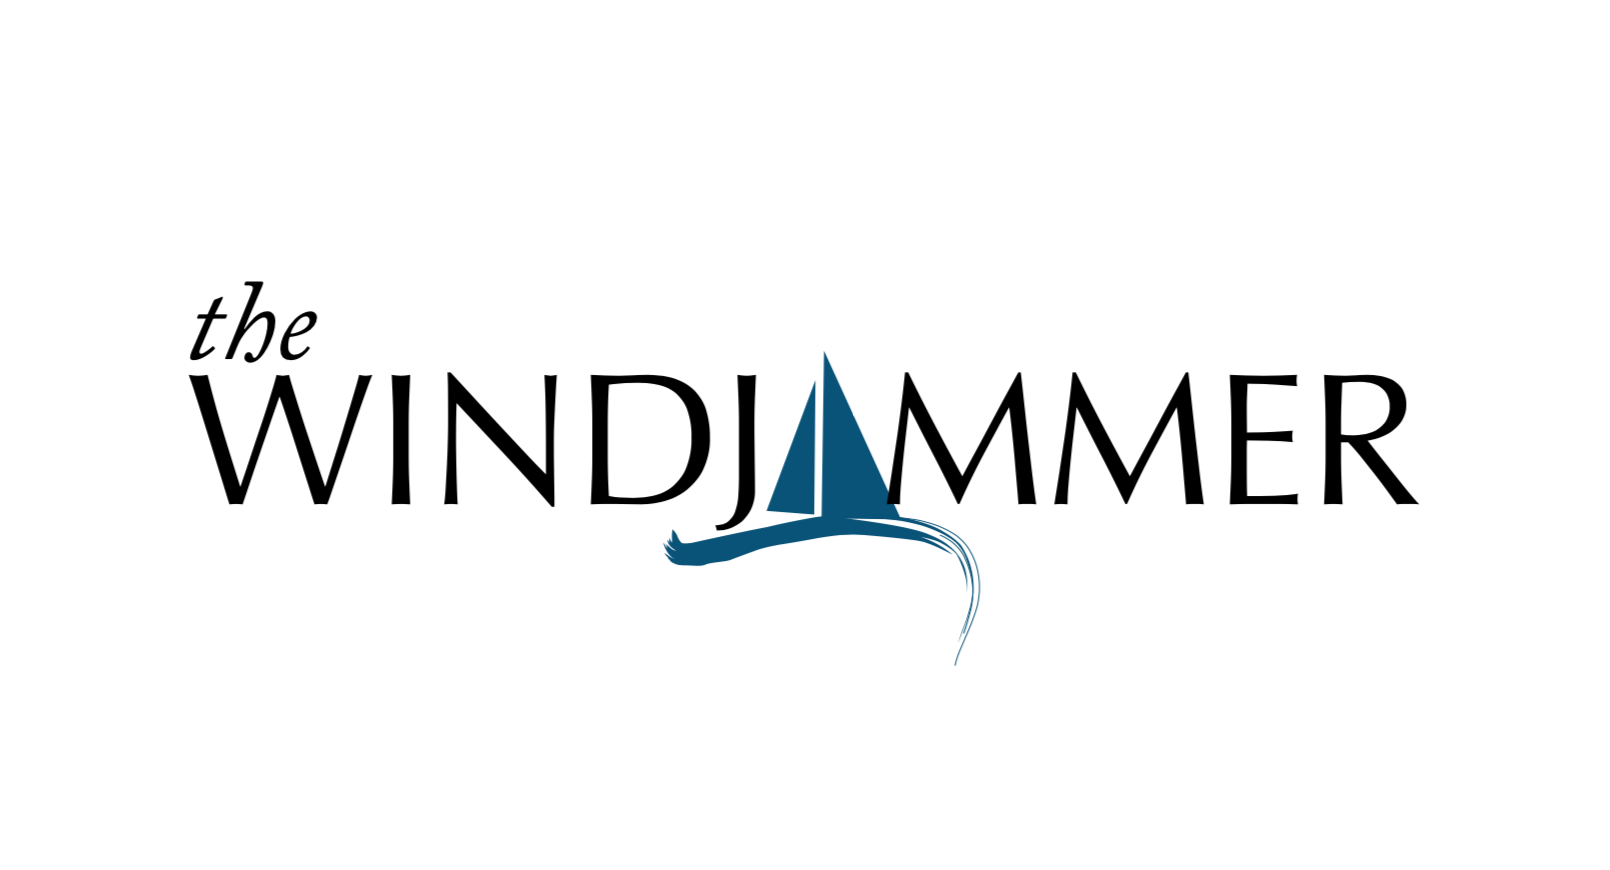 Windjammer logo design